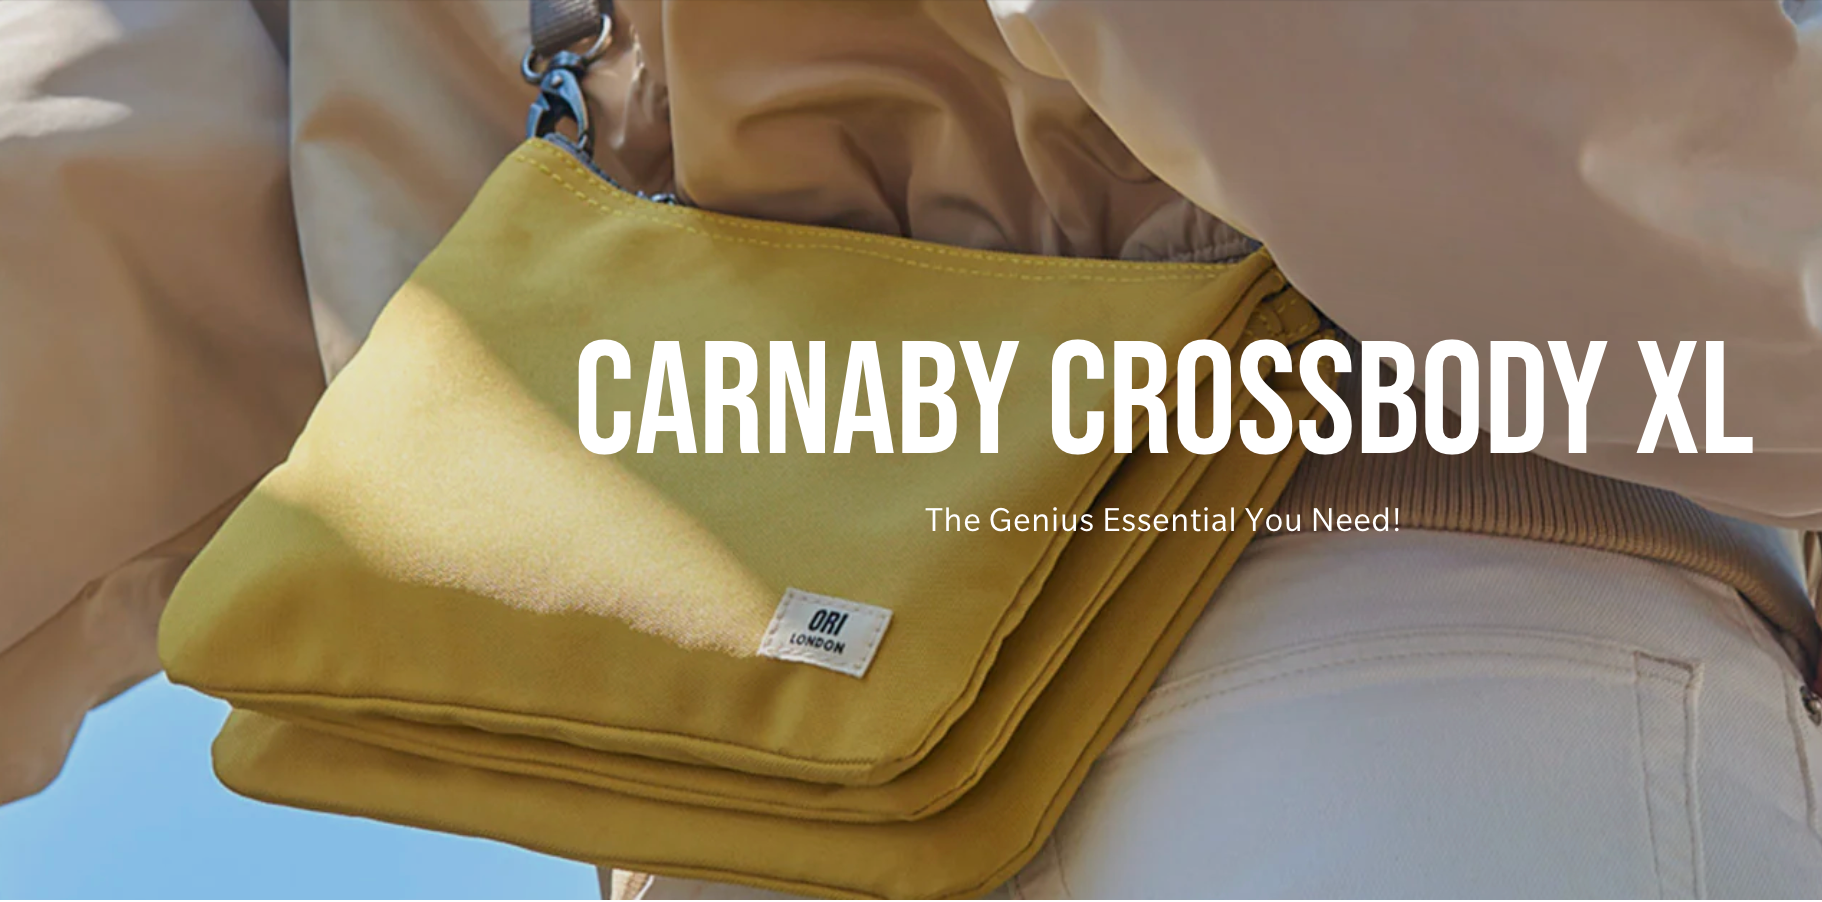 Ori Water Resistant bag Carnaby Crossbody XL Purse